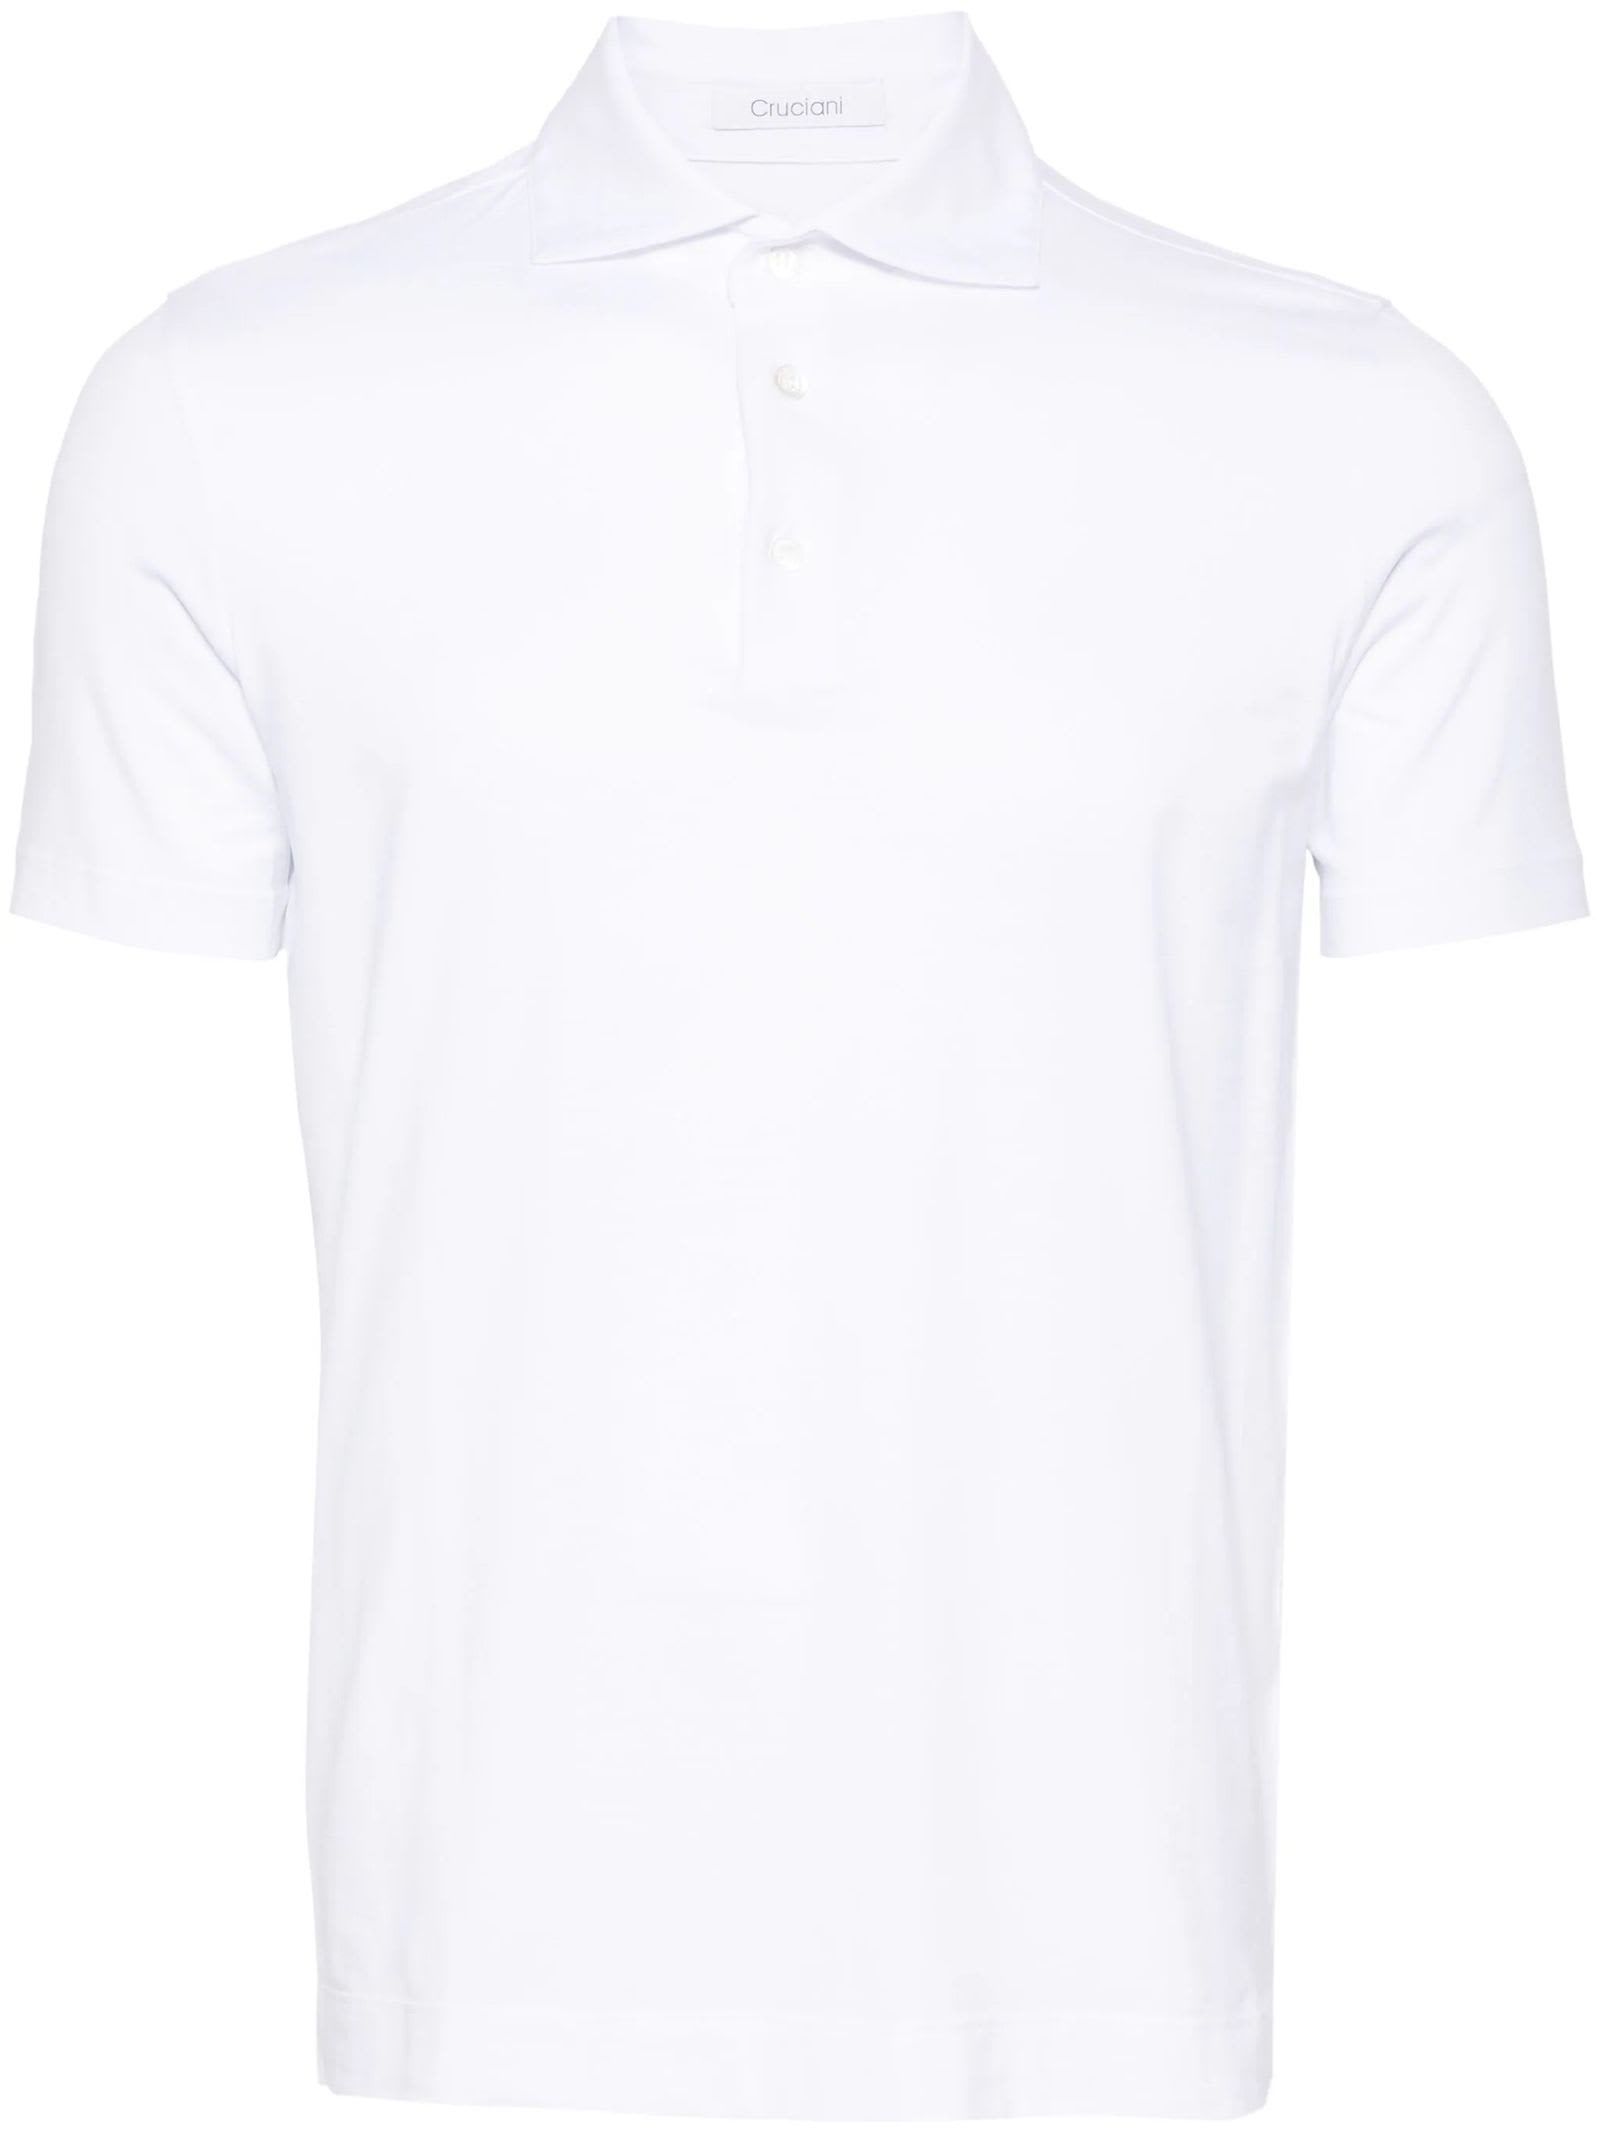 White Cotton Blend Polo Shirt